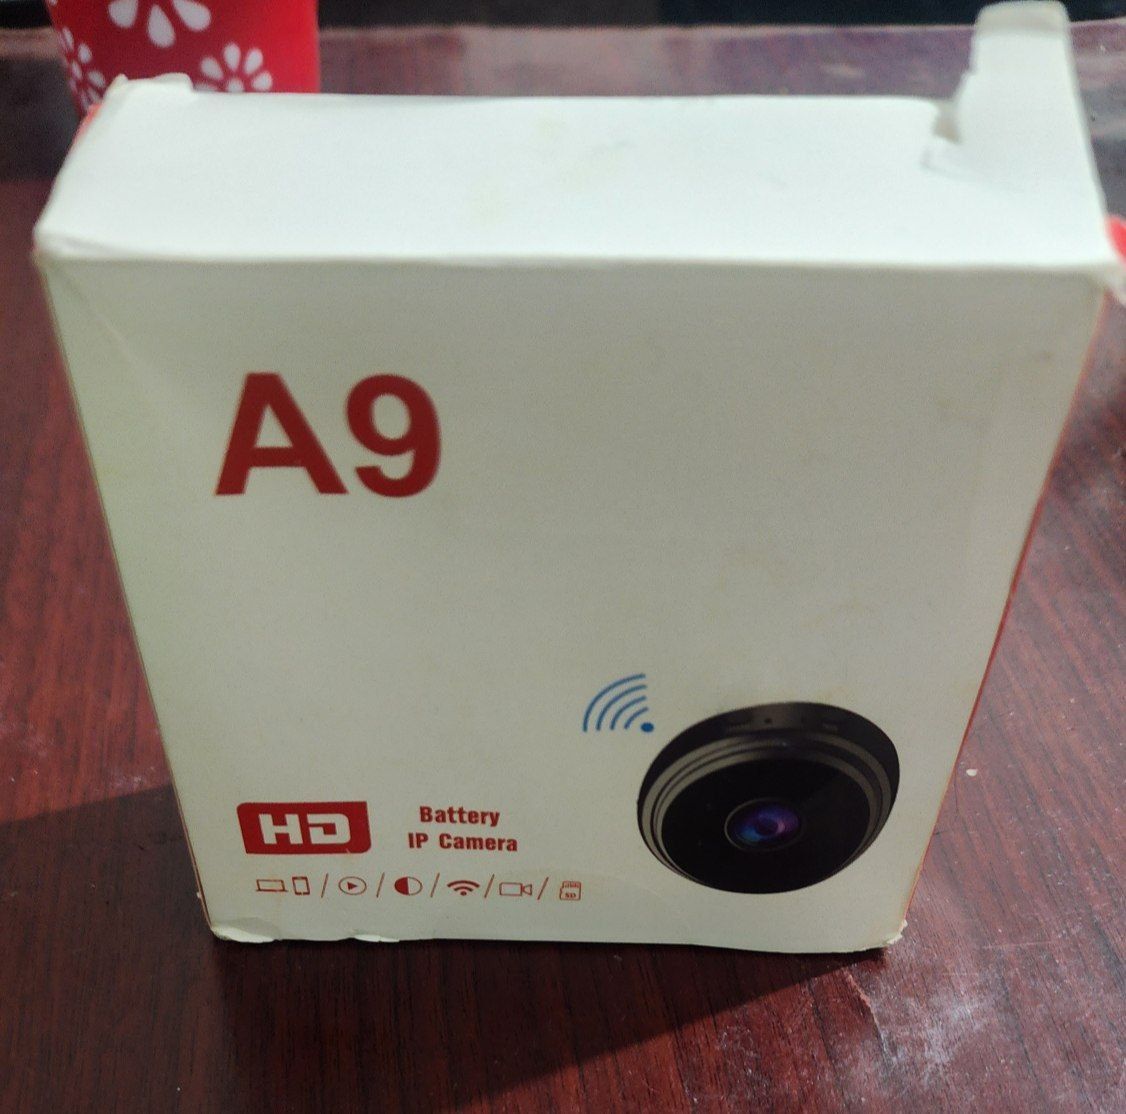 A9 HD CAMERA, ip camera